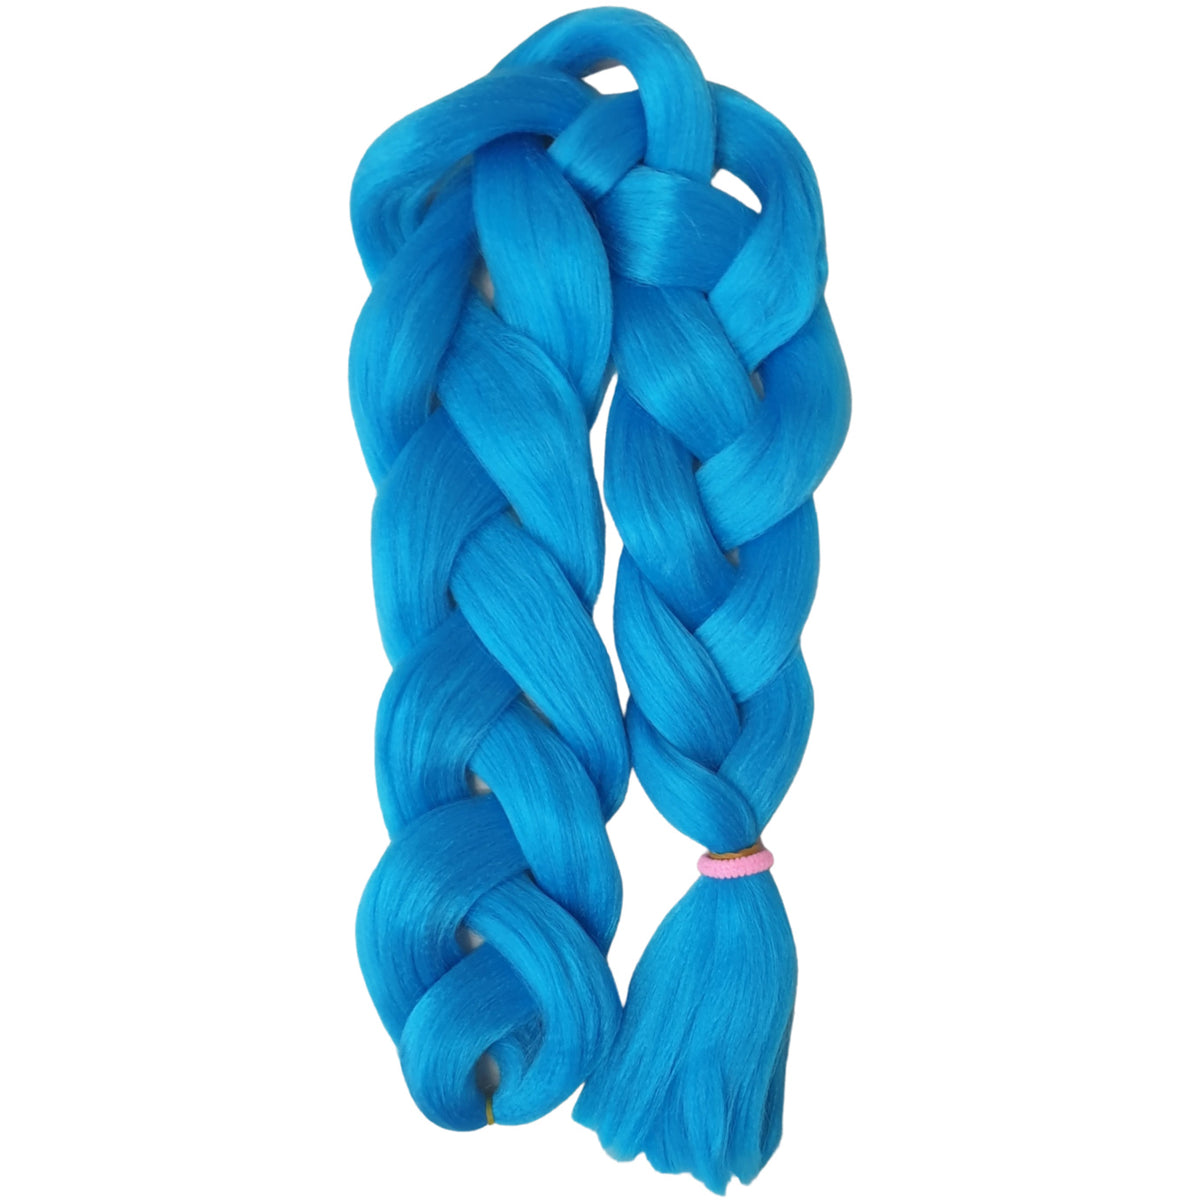 Afrihair Jumbo BLUE II - 41 Inch Braiding Hair